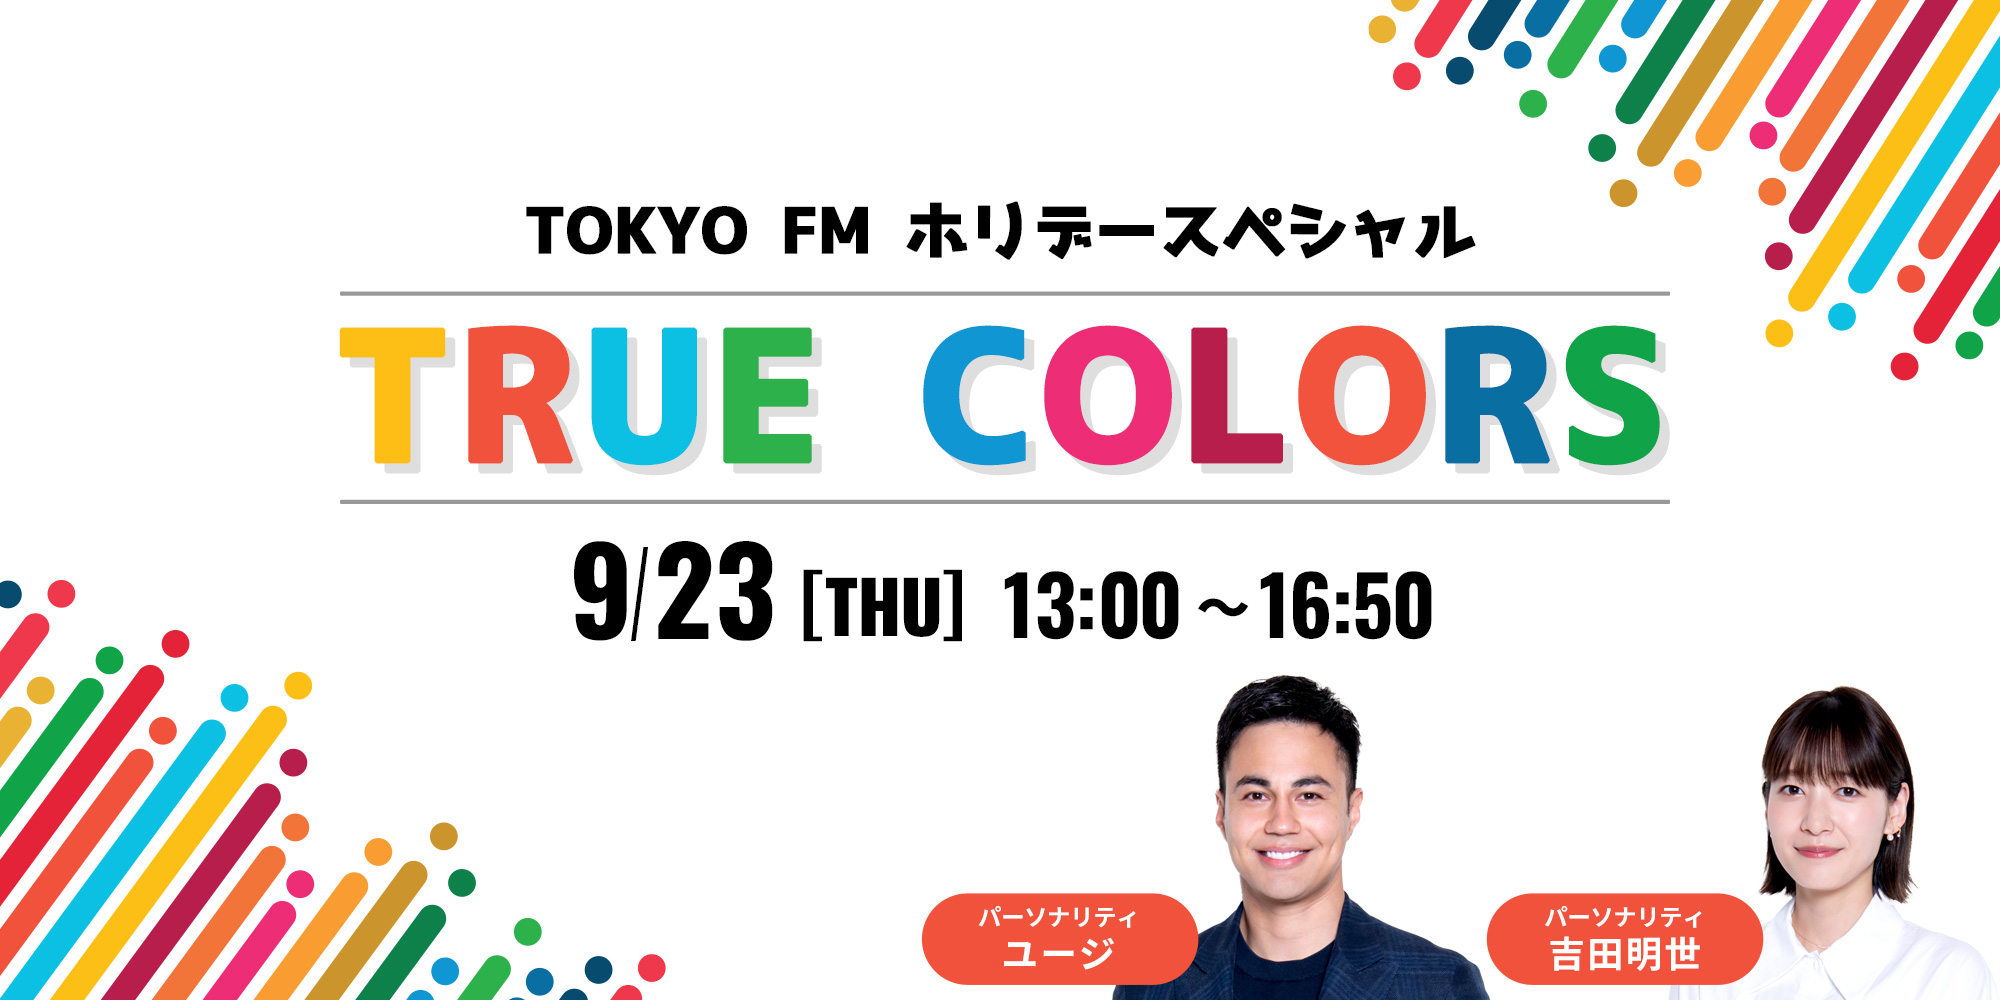 TOKYO FM ホリデースペシャル TRUE COLORS